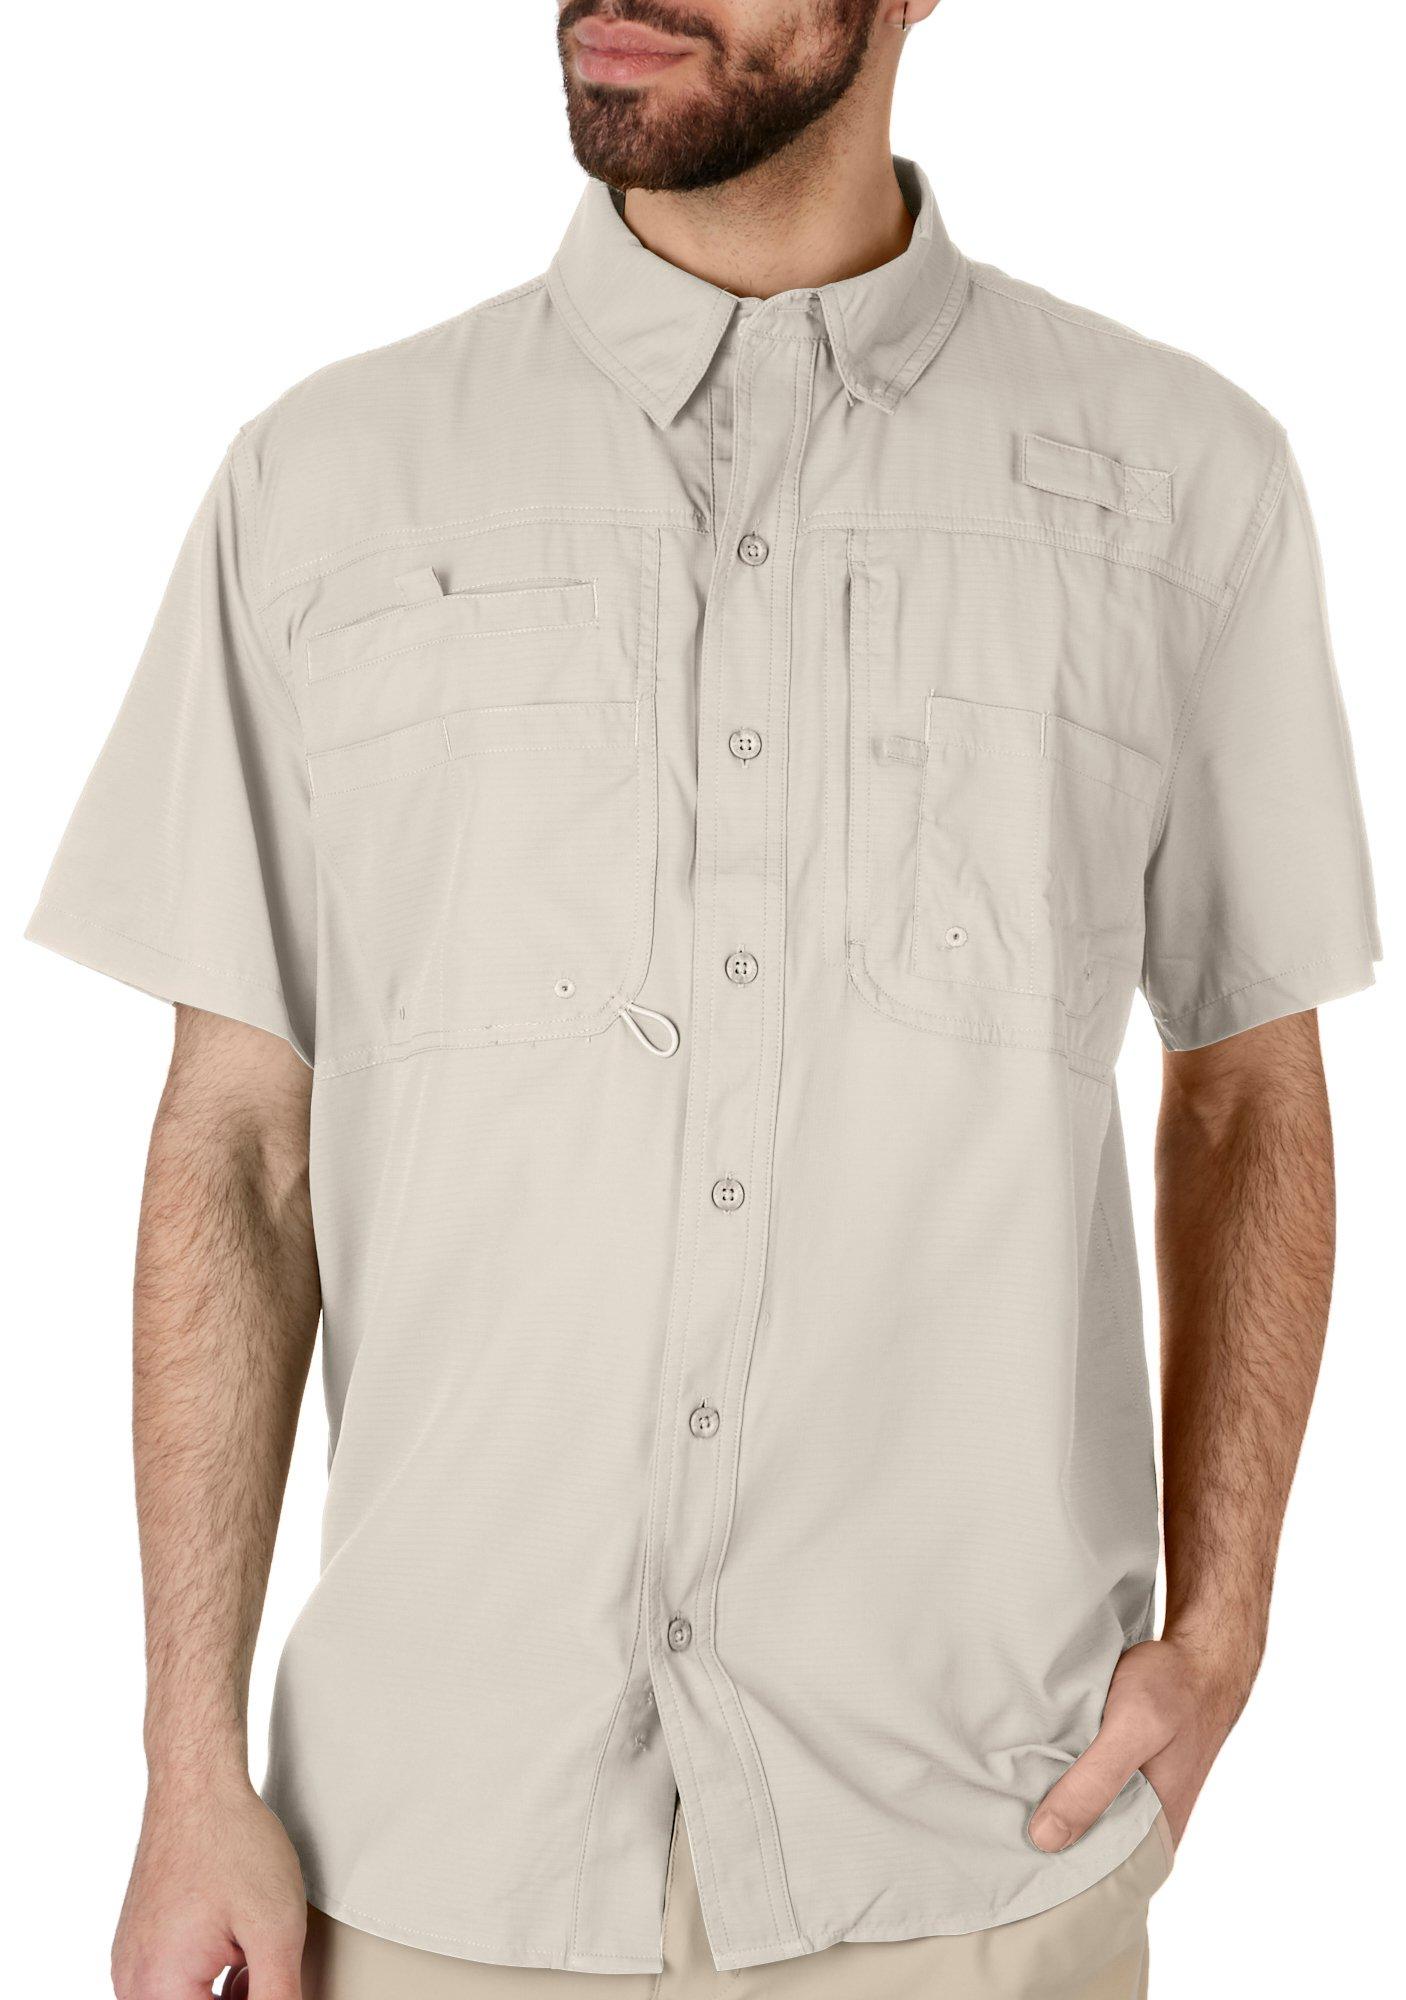 Reel Legends Mens Solid Saltwater II Short Sleeve Shirt - Light Gray - Small